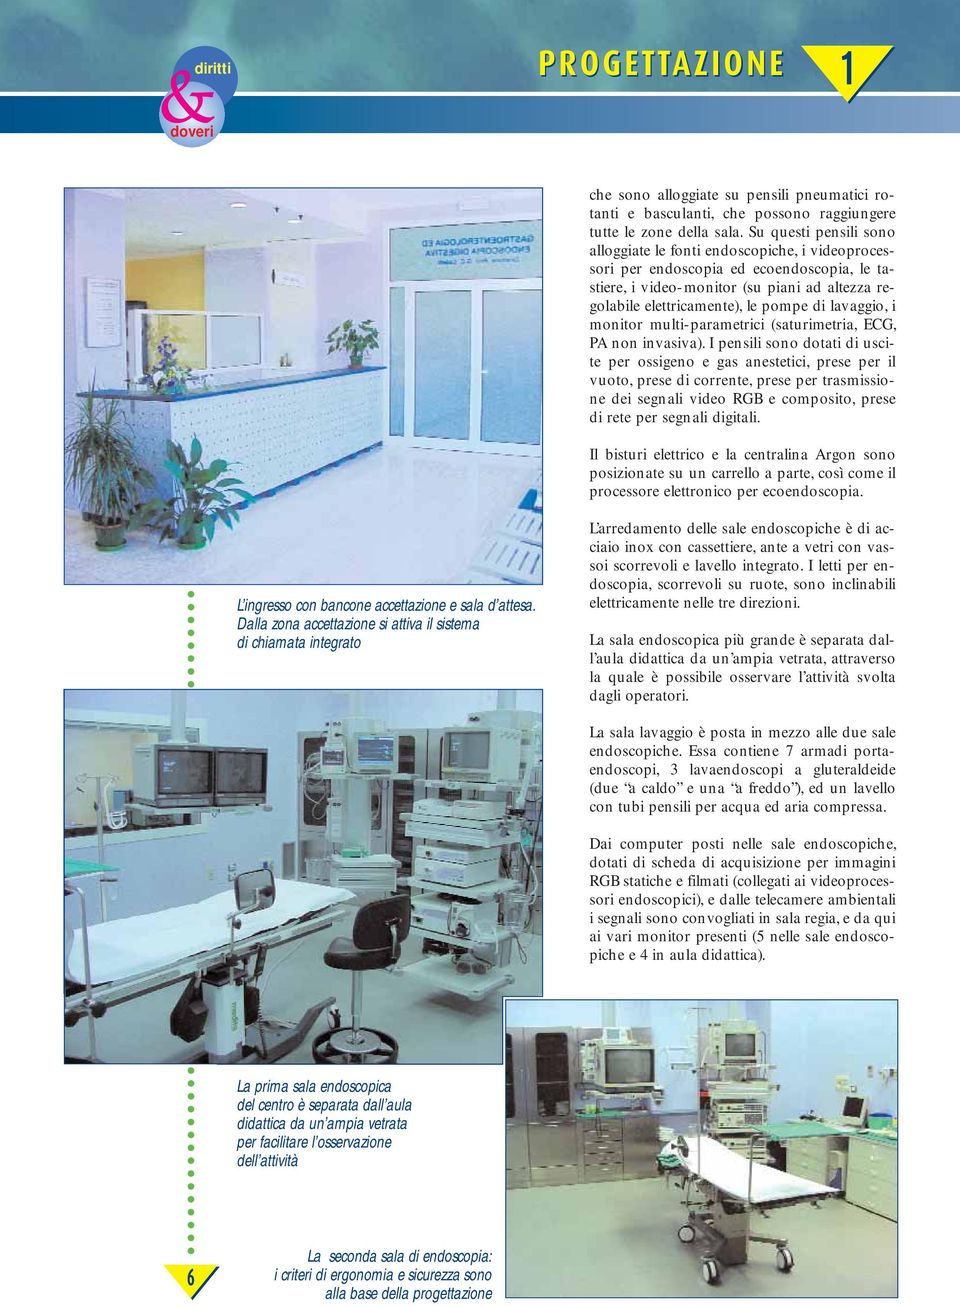 lavaggio, i monitor multi-parametrici (saturimetria, ECG, PA non invasiva).